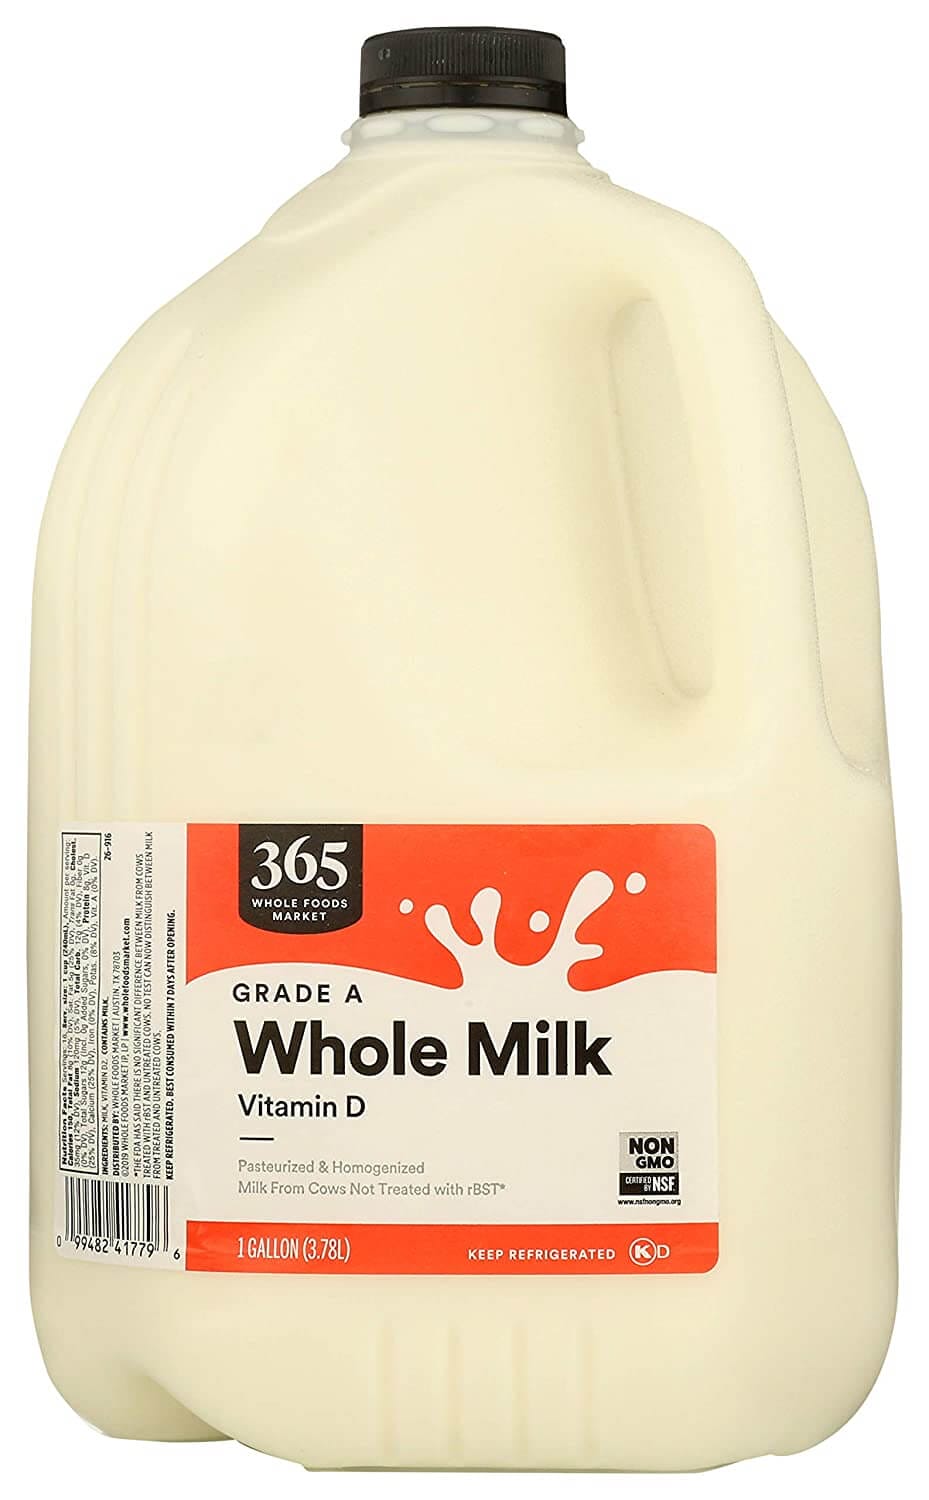 Regular pasteurized milk